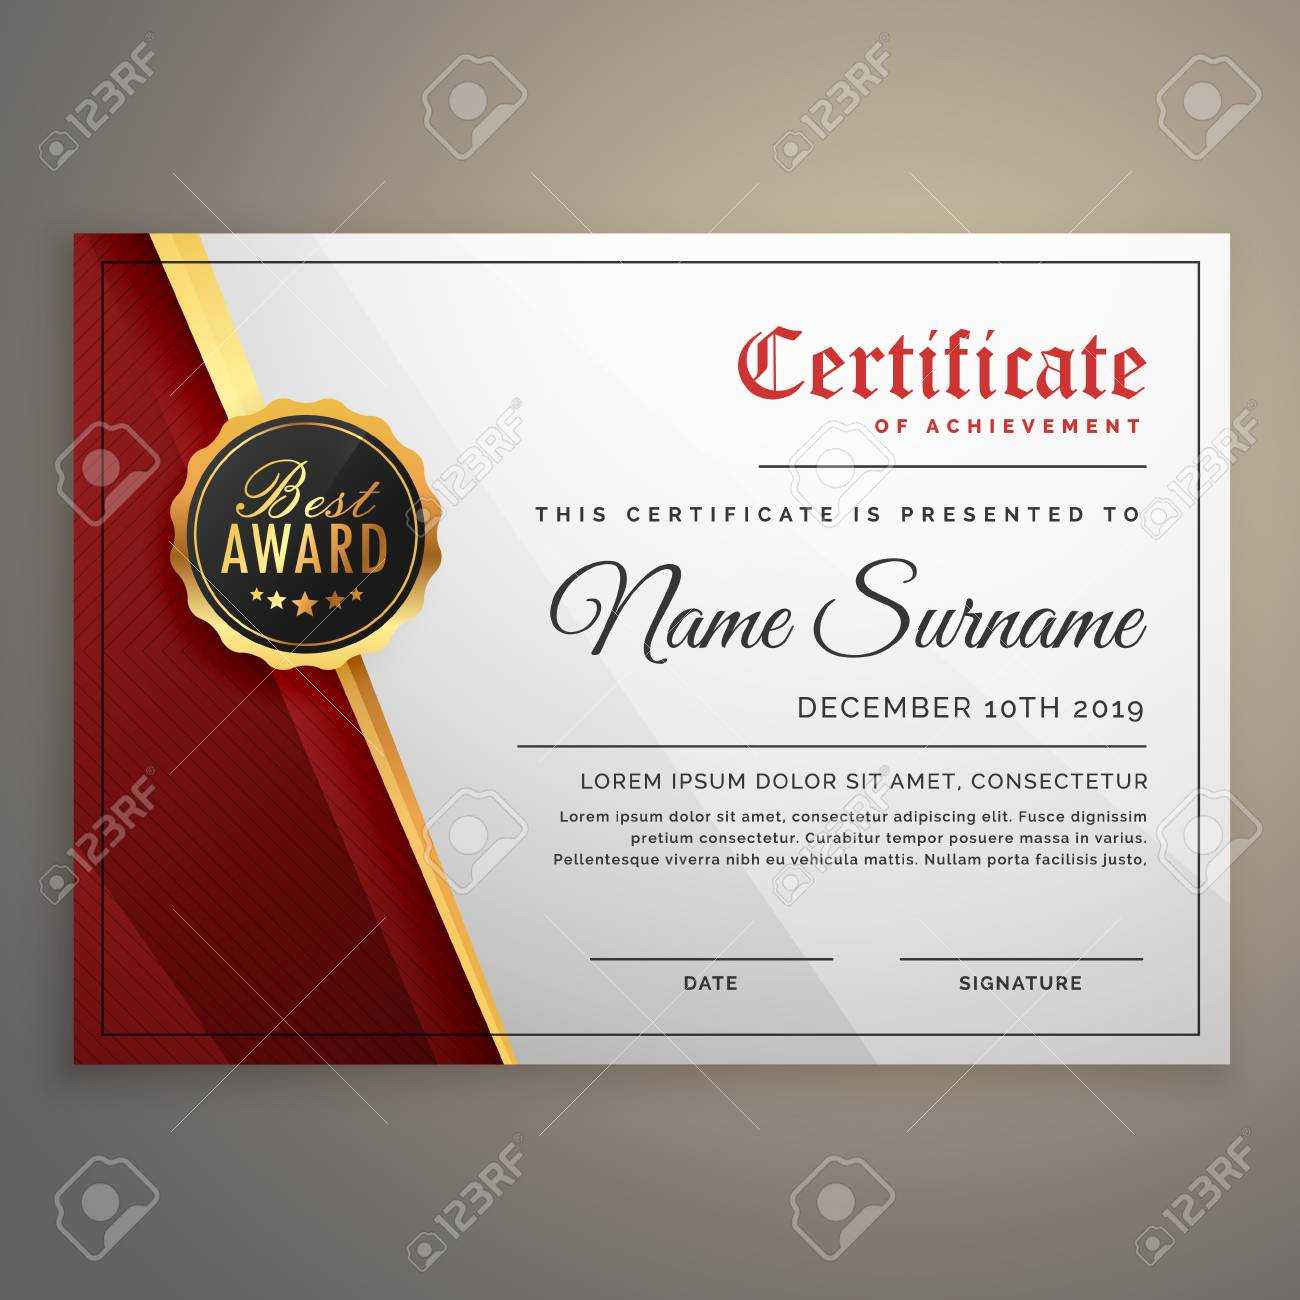 Beautiful Certificate Template Design With Best Award Symbol Inside Beautiful Certificate Templates